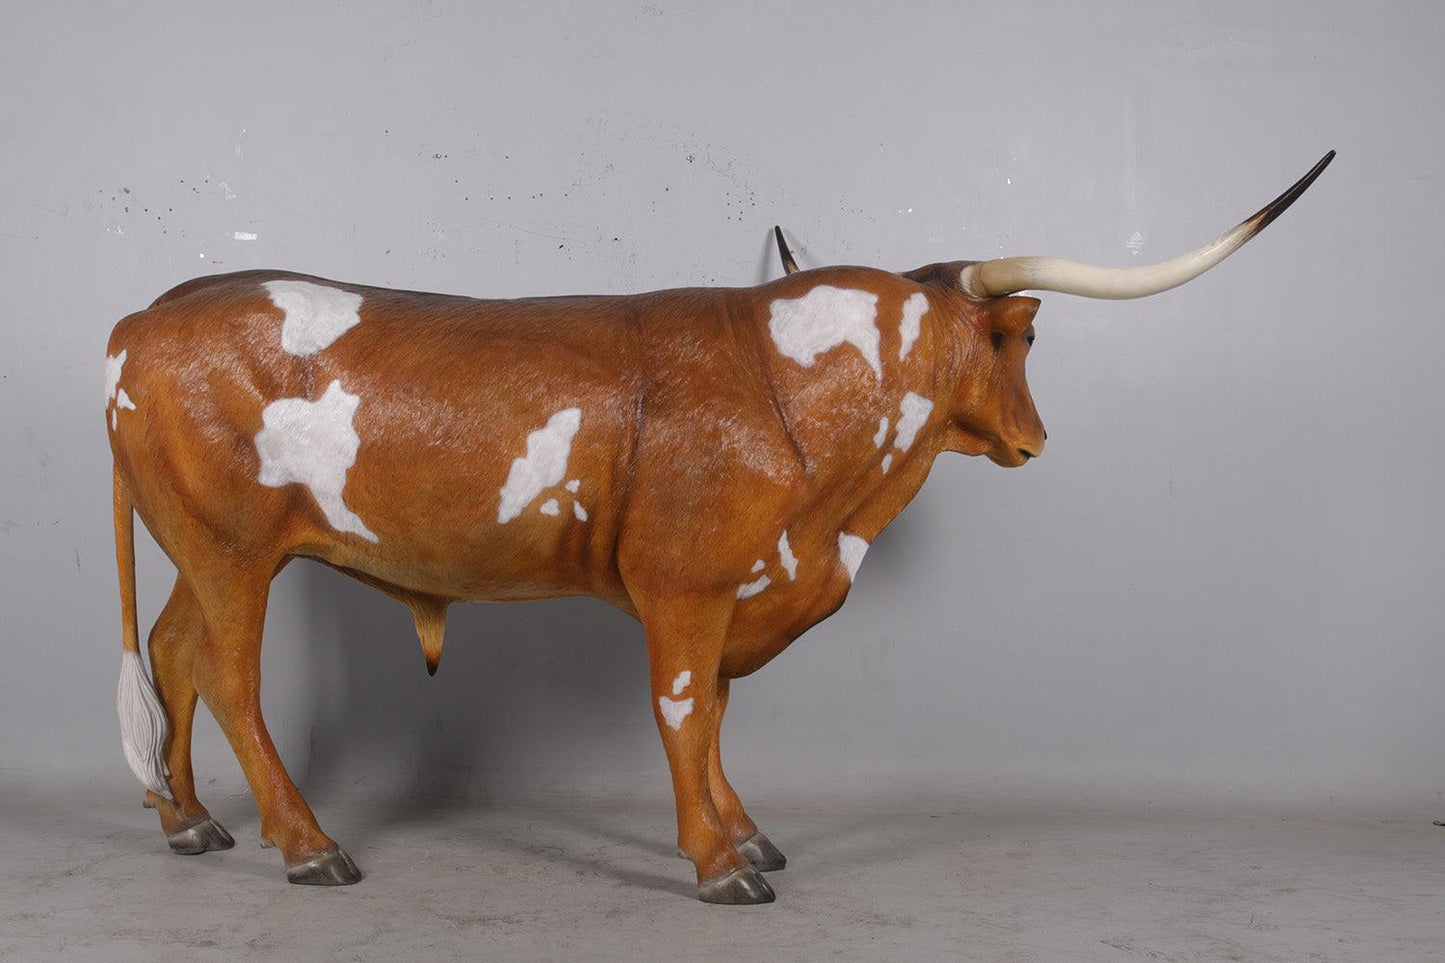 Texas Long Horn Life Size Statue